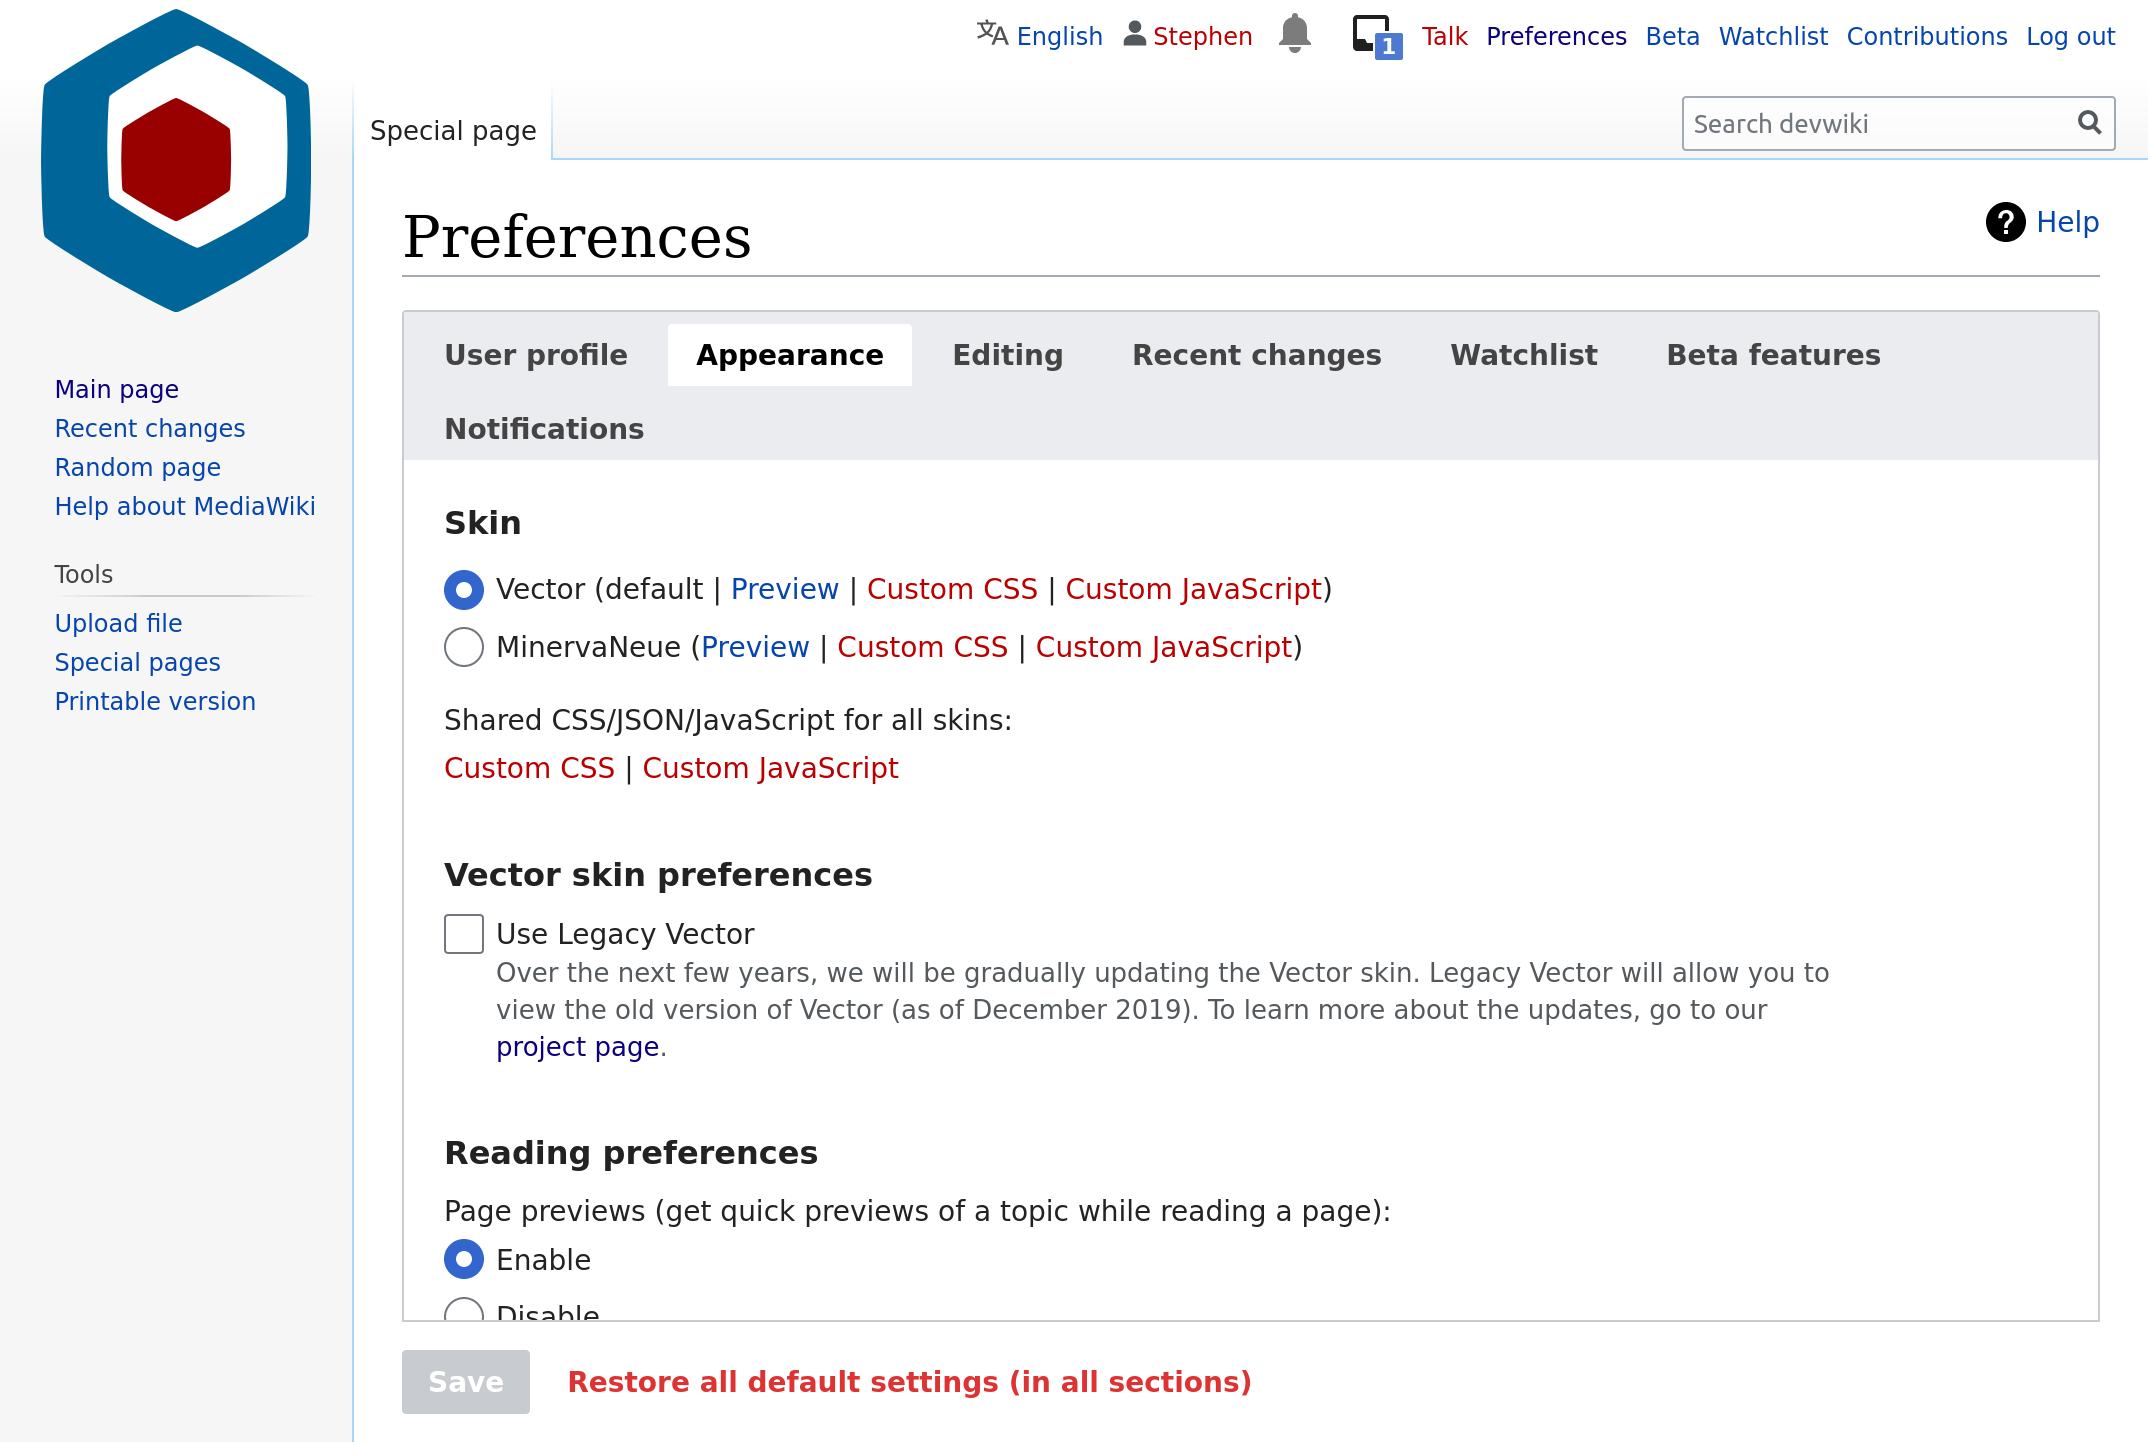 Screenshot_2020-02-24 Preferences - devwiki.png (1×2 px, 226 KB)